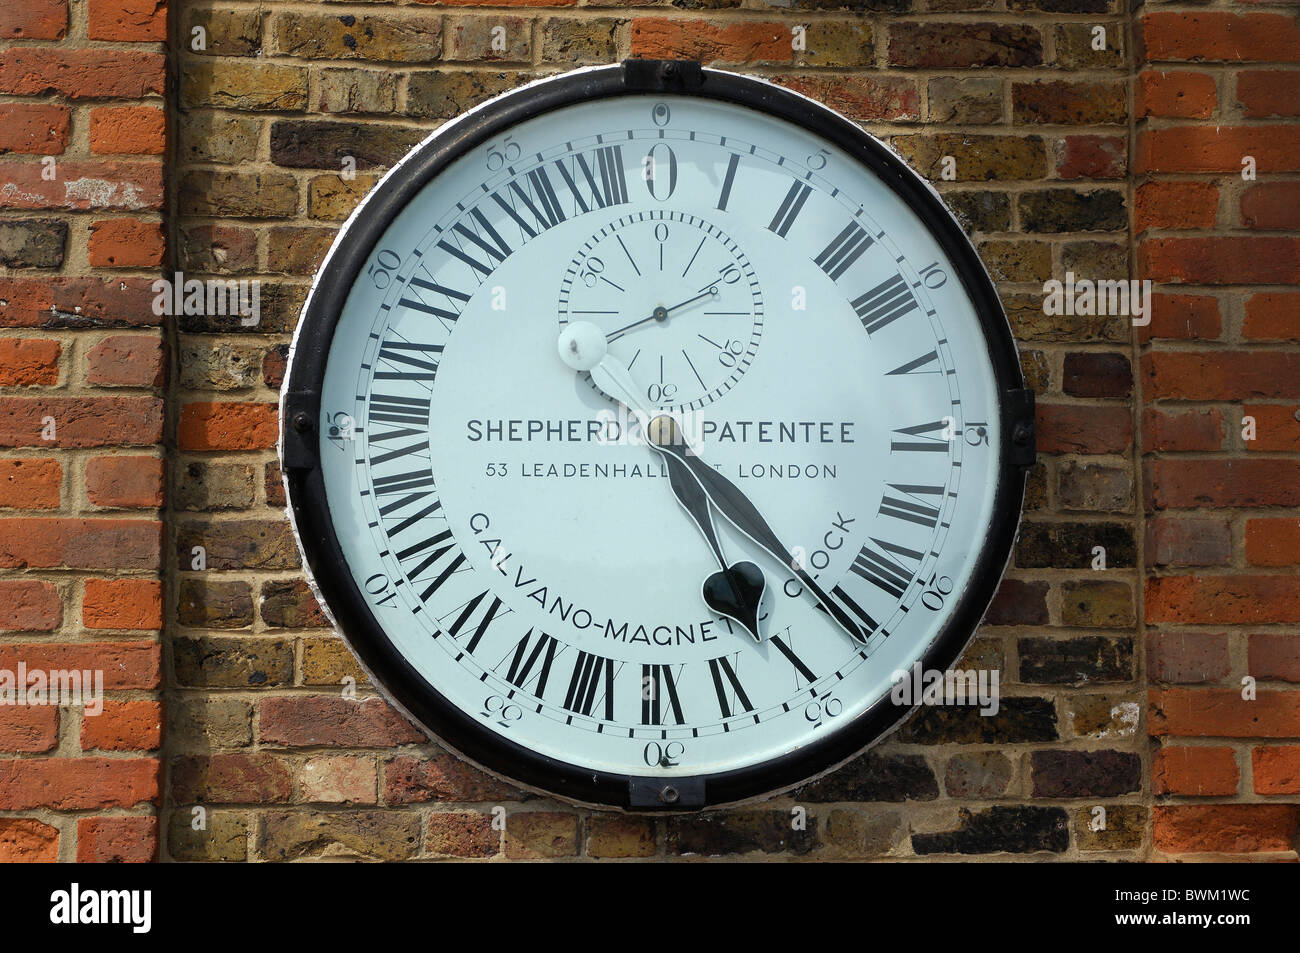 London Greenwich Time Clock Royal Greenwich Observatory Greenwich Britain England world time Stock Photo - Alamy